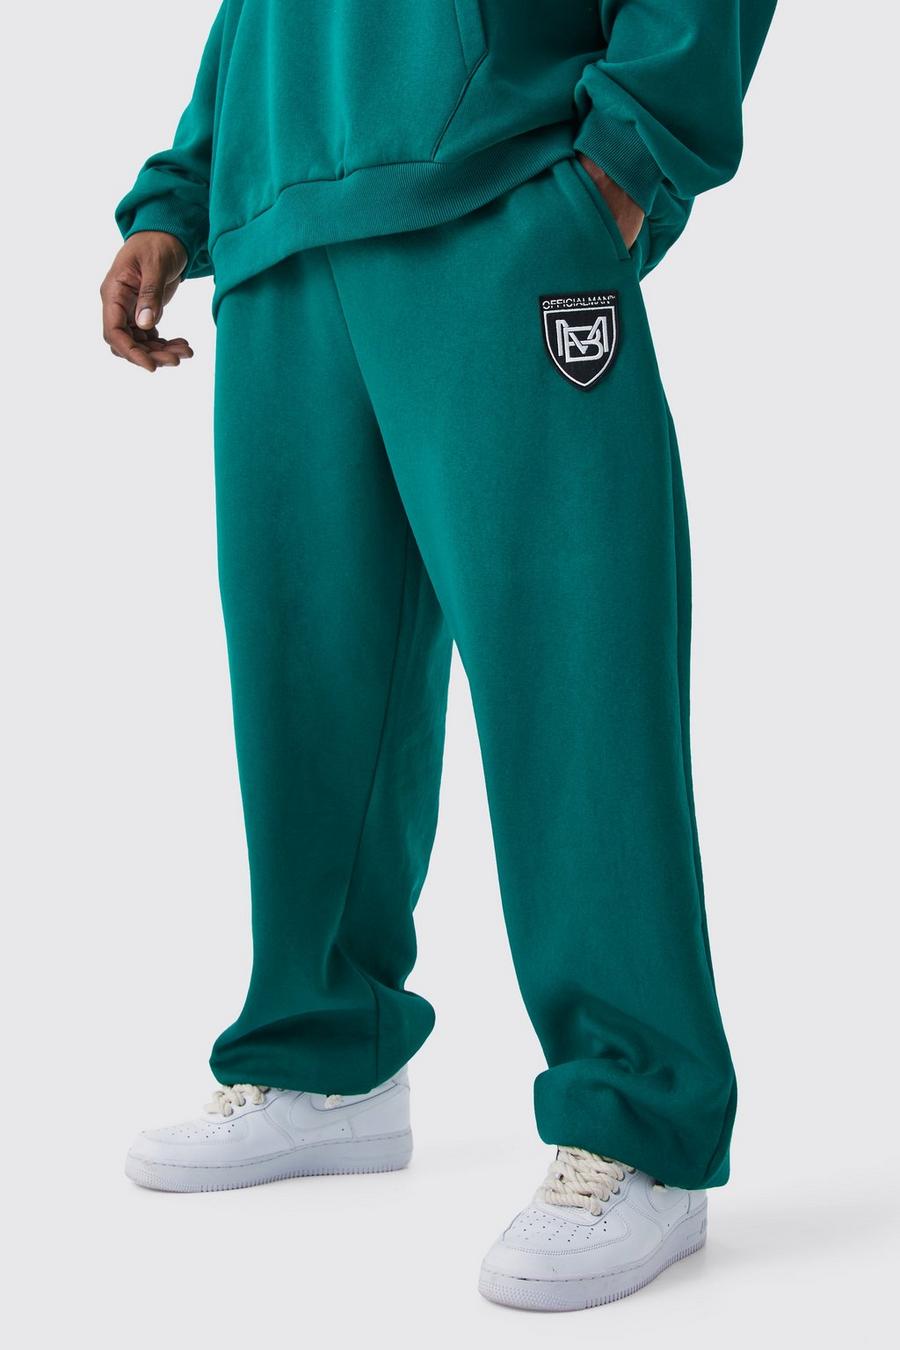 Pantaloni tuta Plus Size oversize Worldwide Football, Green image number 1